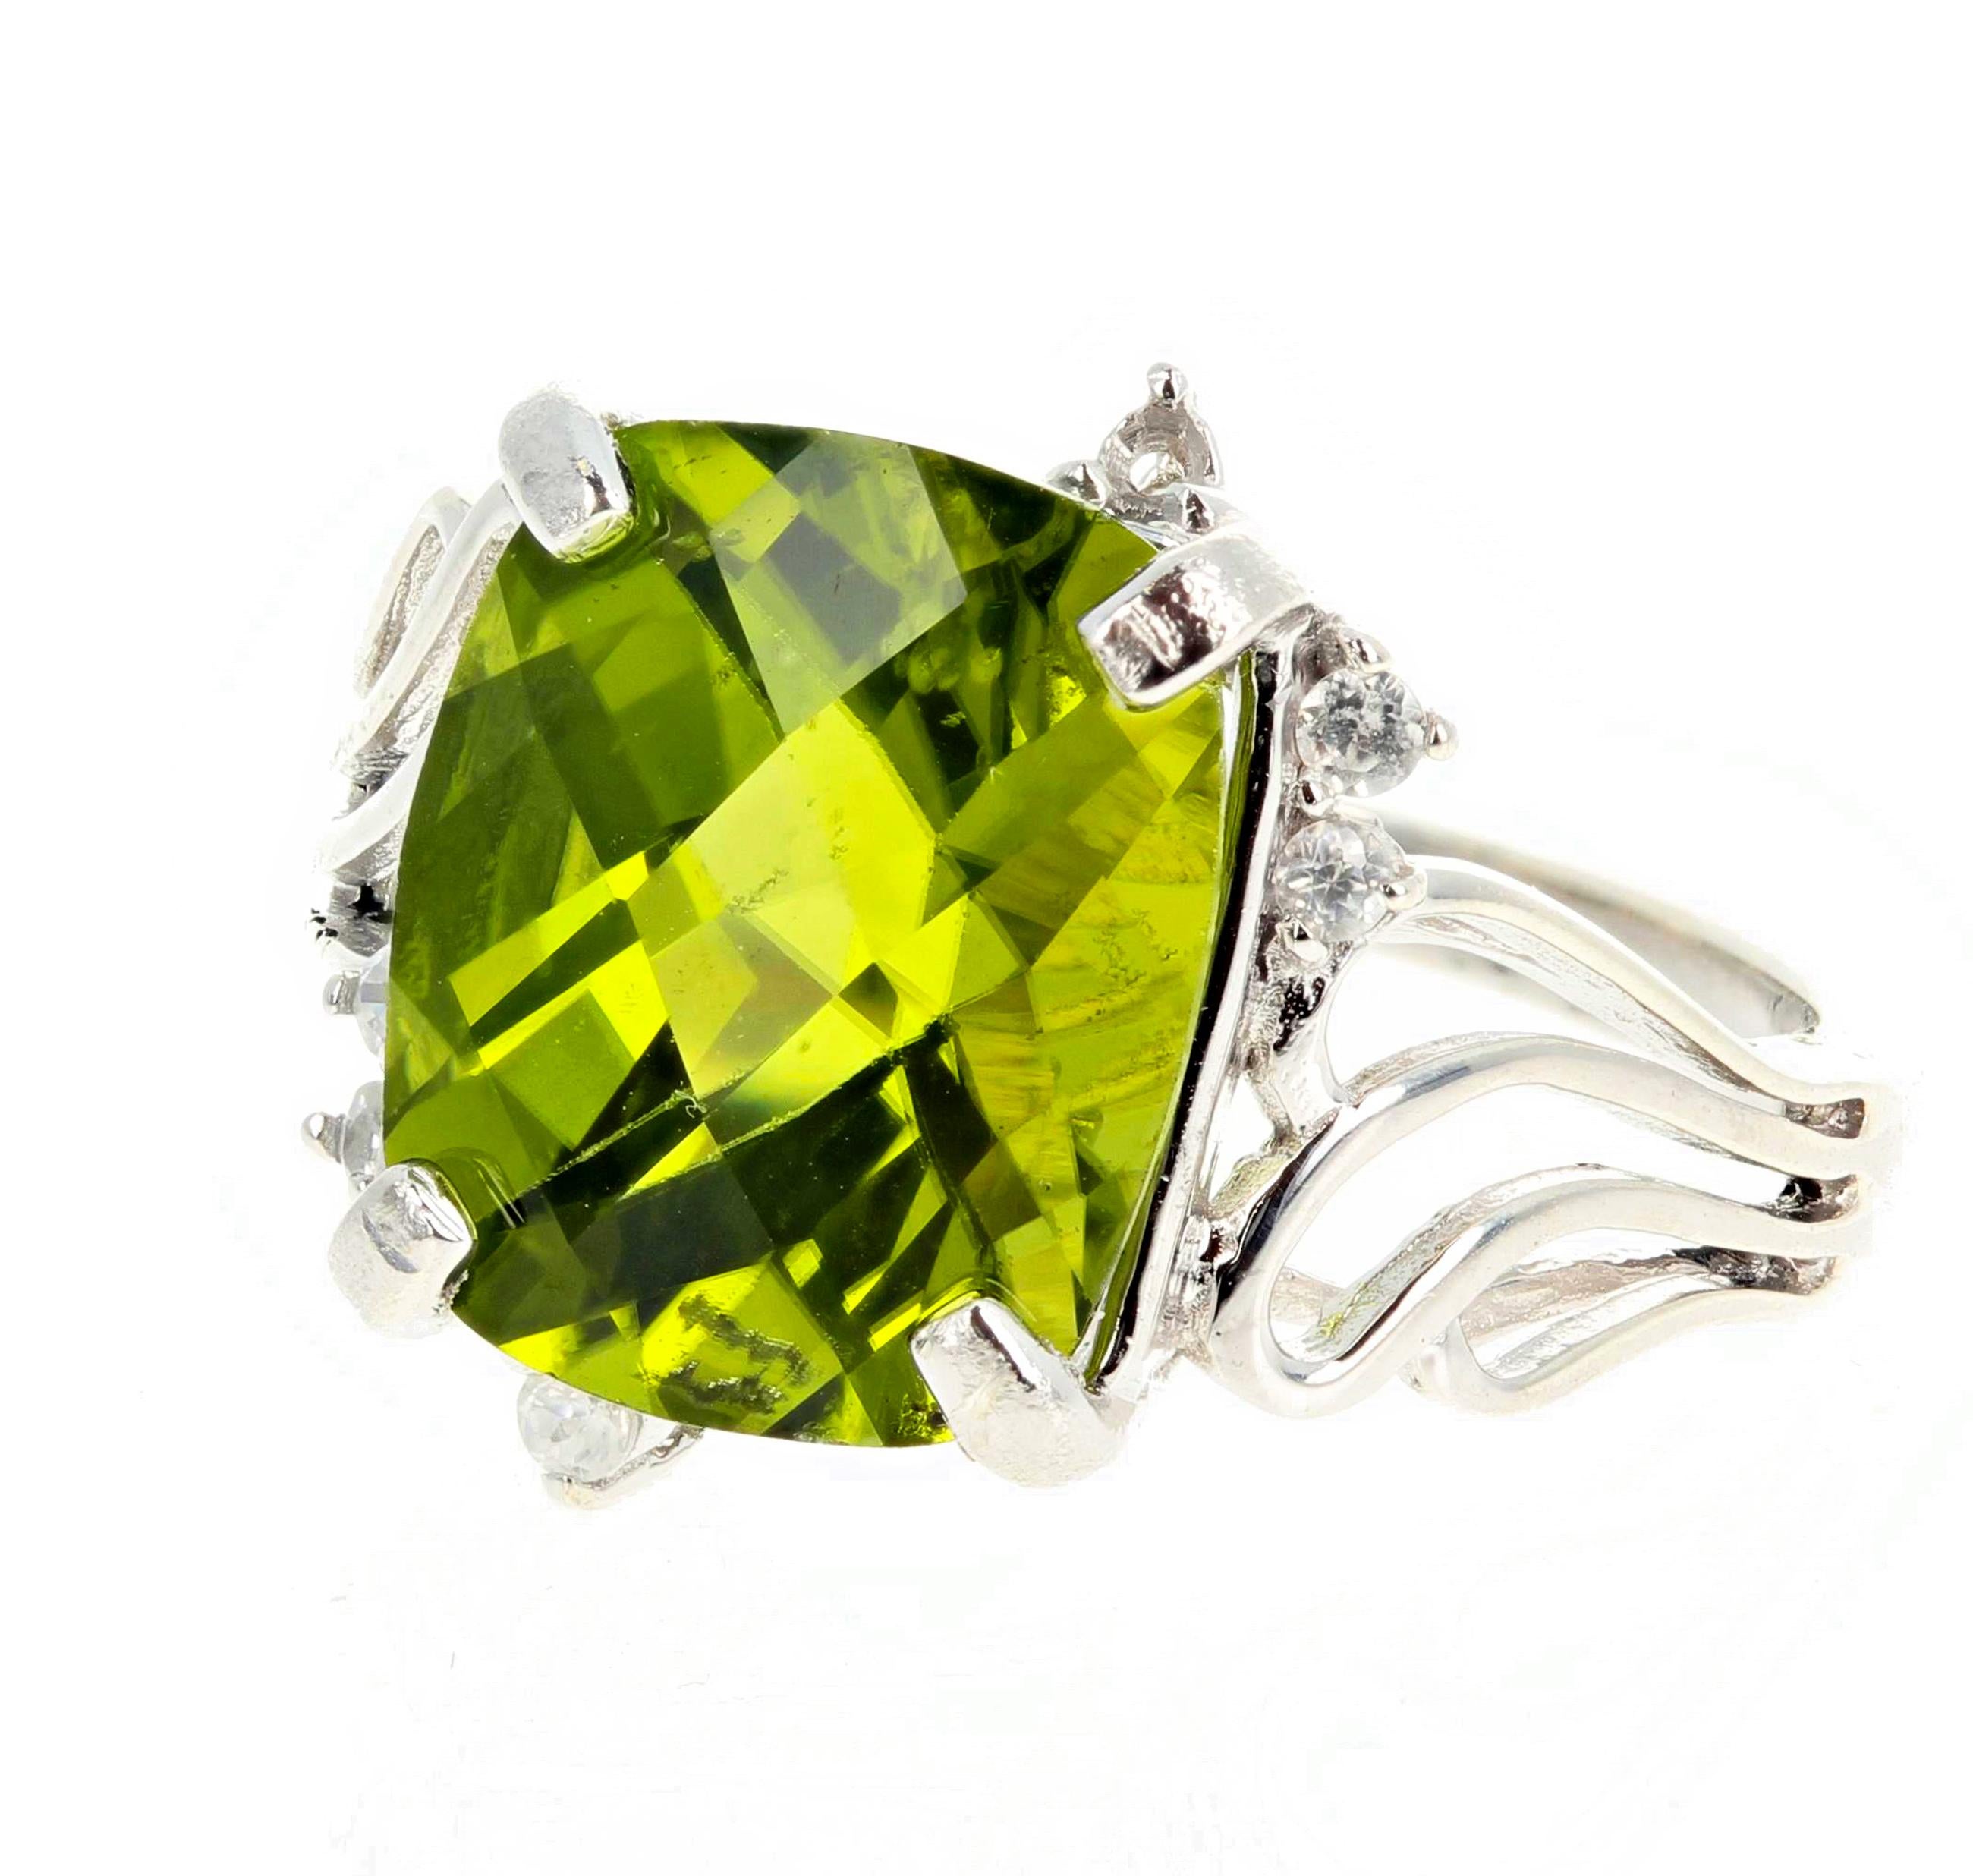 Taille mixte AJD Bague rare en zircon vert naturel de Sri Lanka de 7,8 carats et diamants en vente